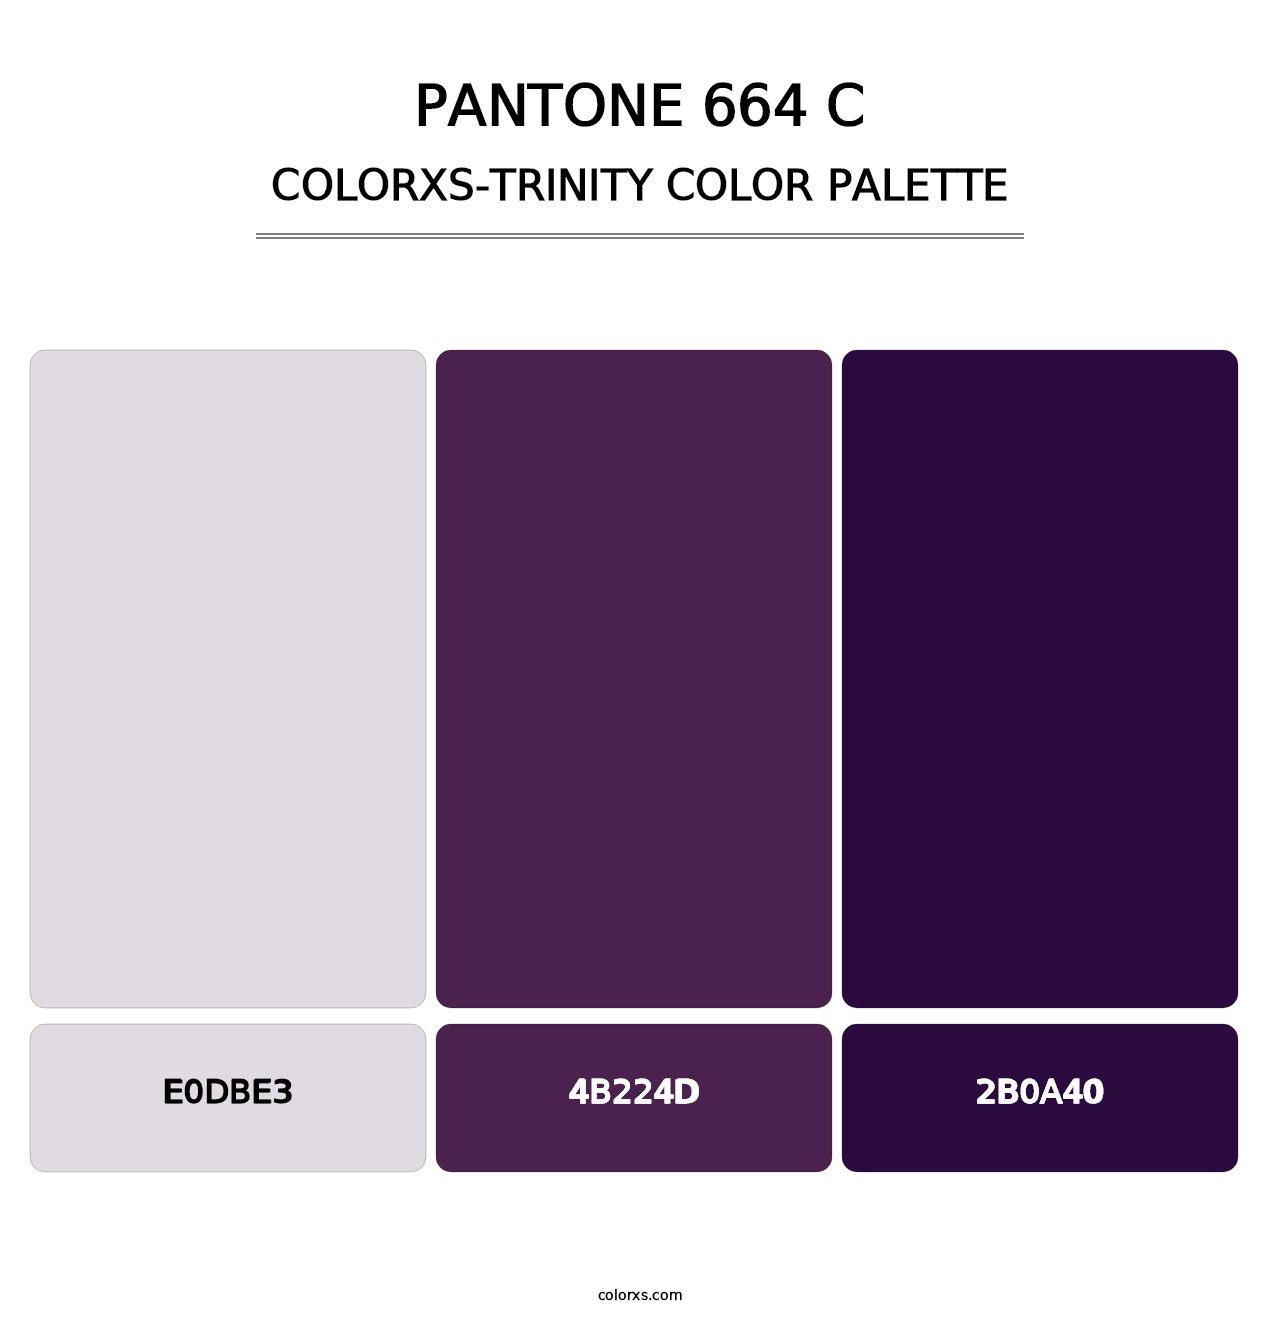 PANTONE 664 C - Colorxs Trinity Palette